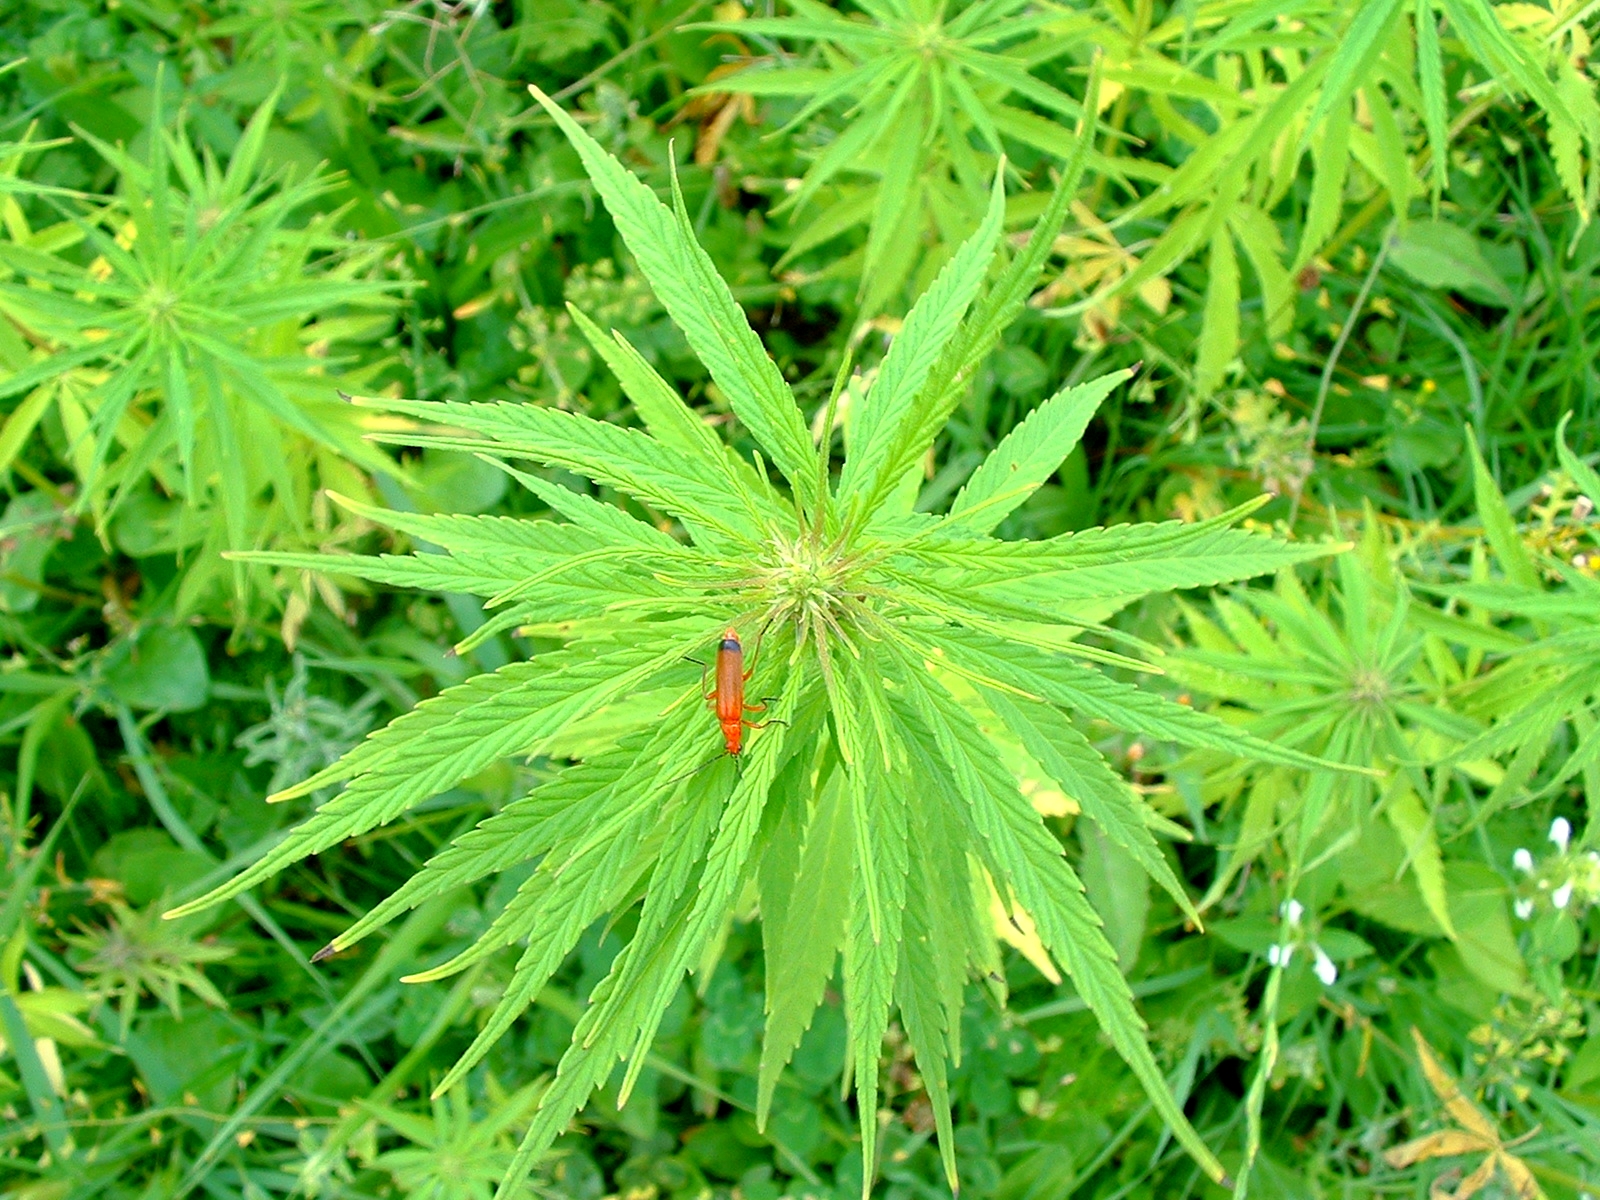 File:Chanvre hemp cannabis sativa (993672315).jpg - Wikimedia Commons